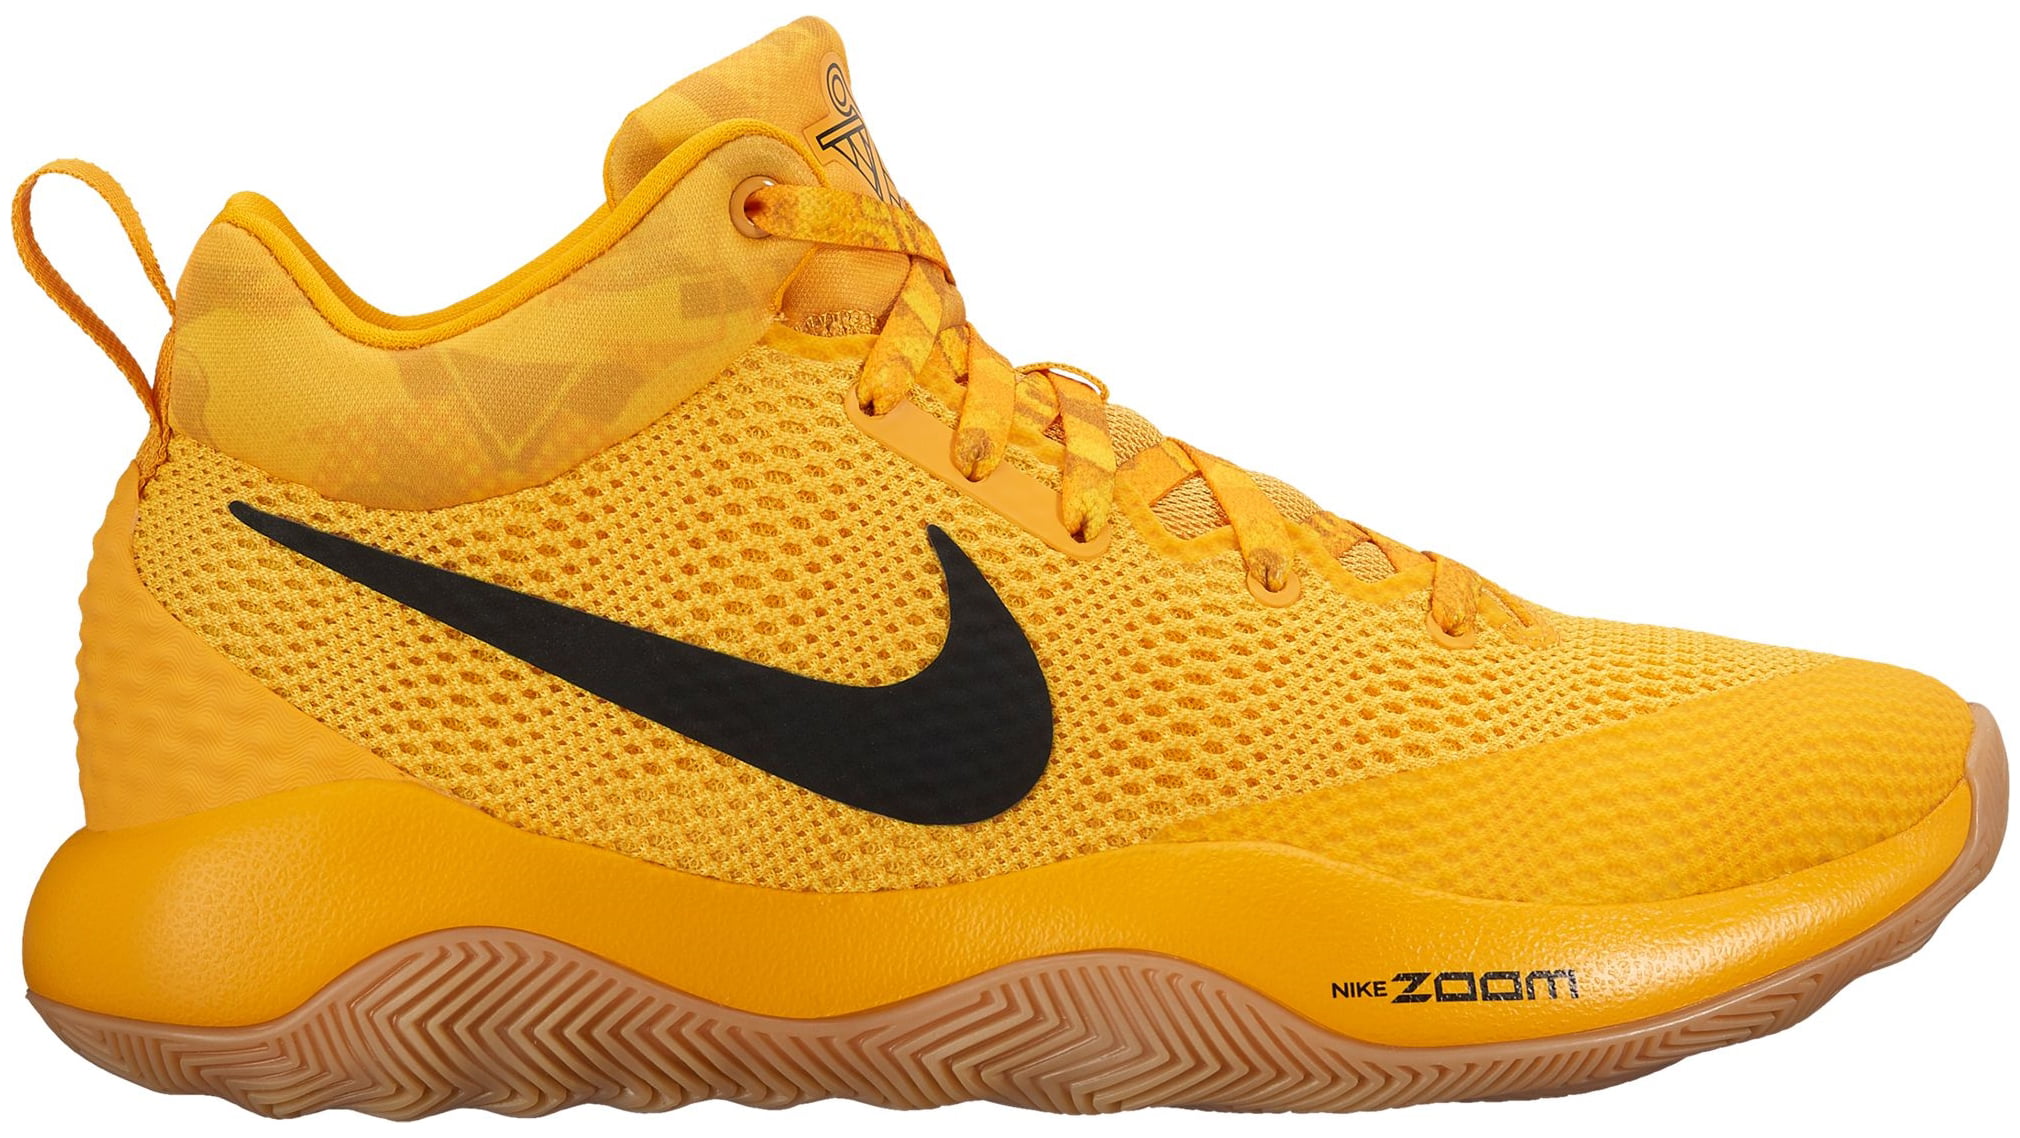 Nike Men's Zoom Rev 2017 Basketball Shoes - Yellow/Black - 11.0 ...